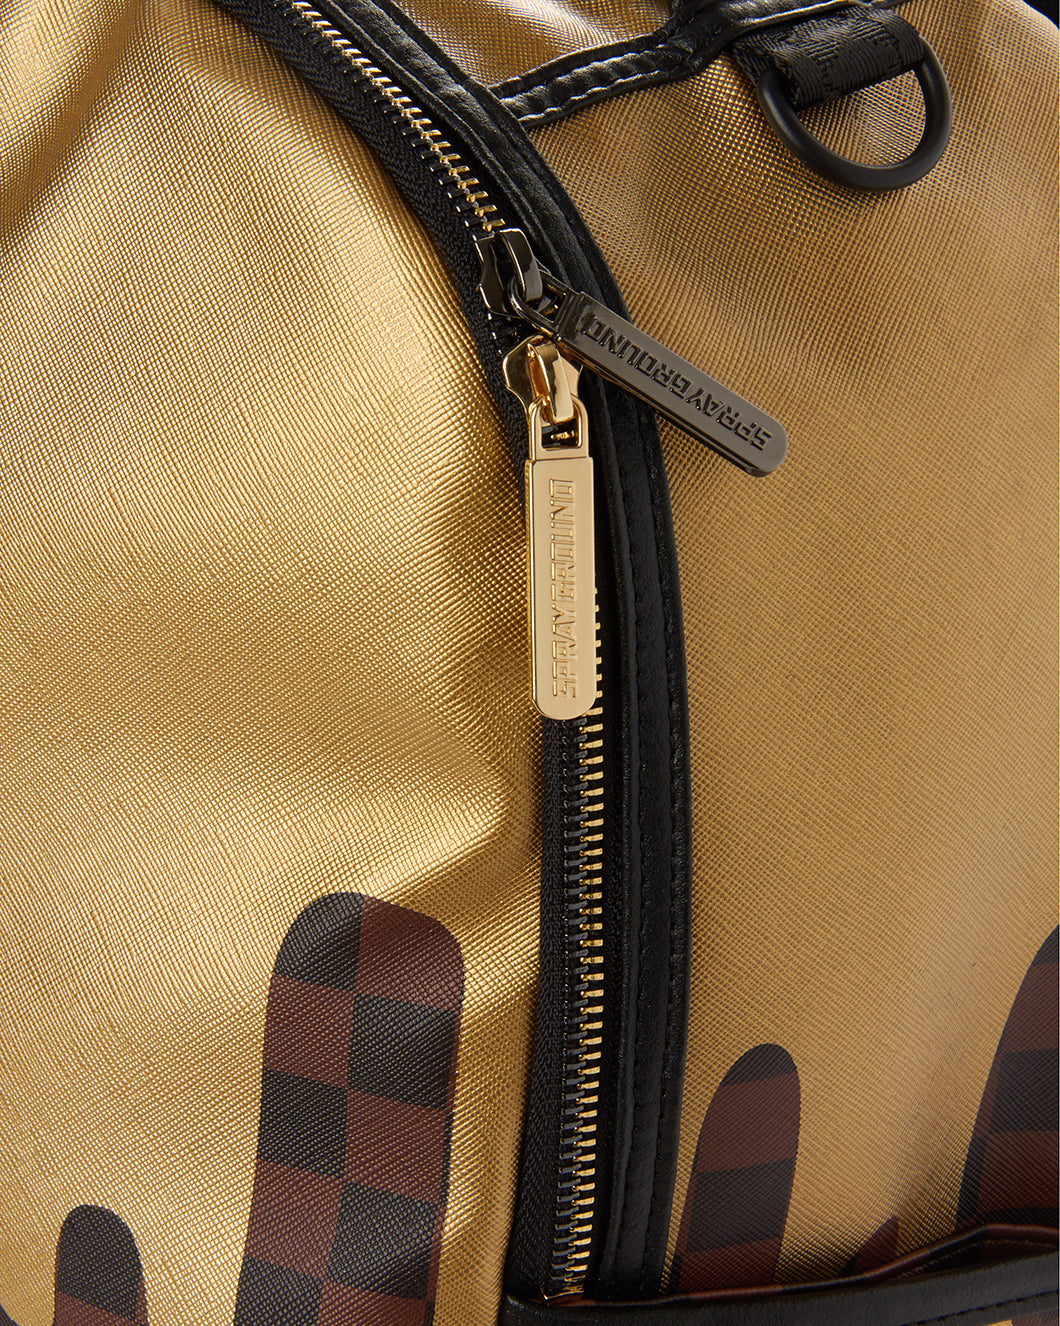 SPRAYGROUND: duble drips print backpack in printed vegan leather